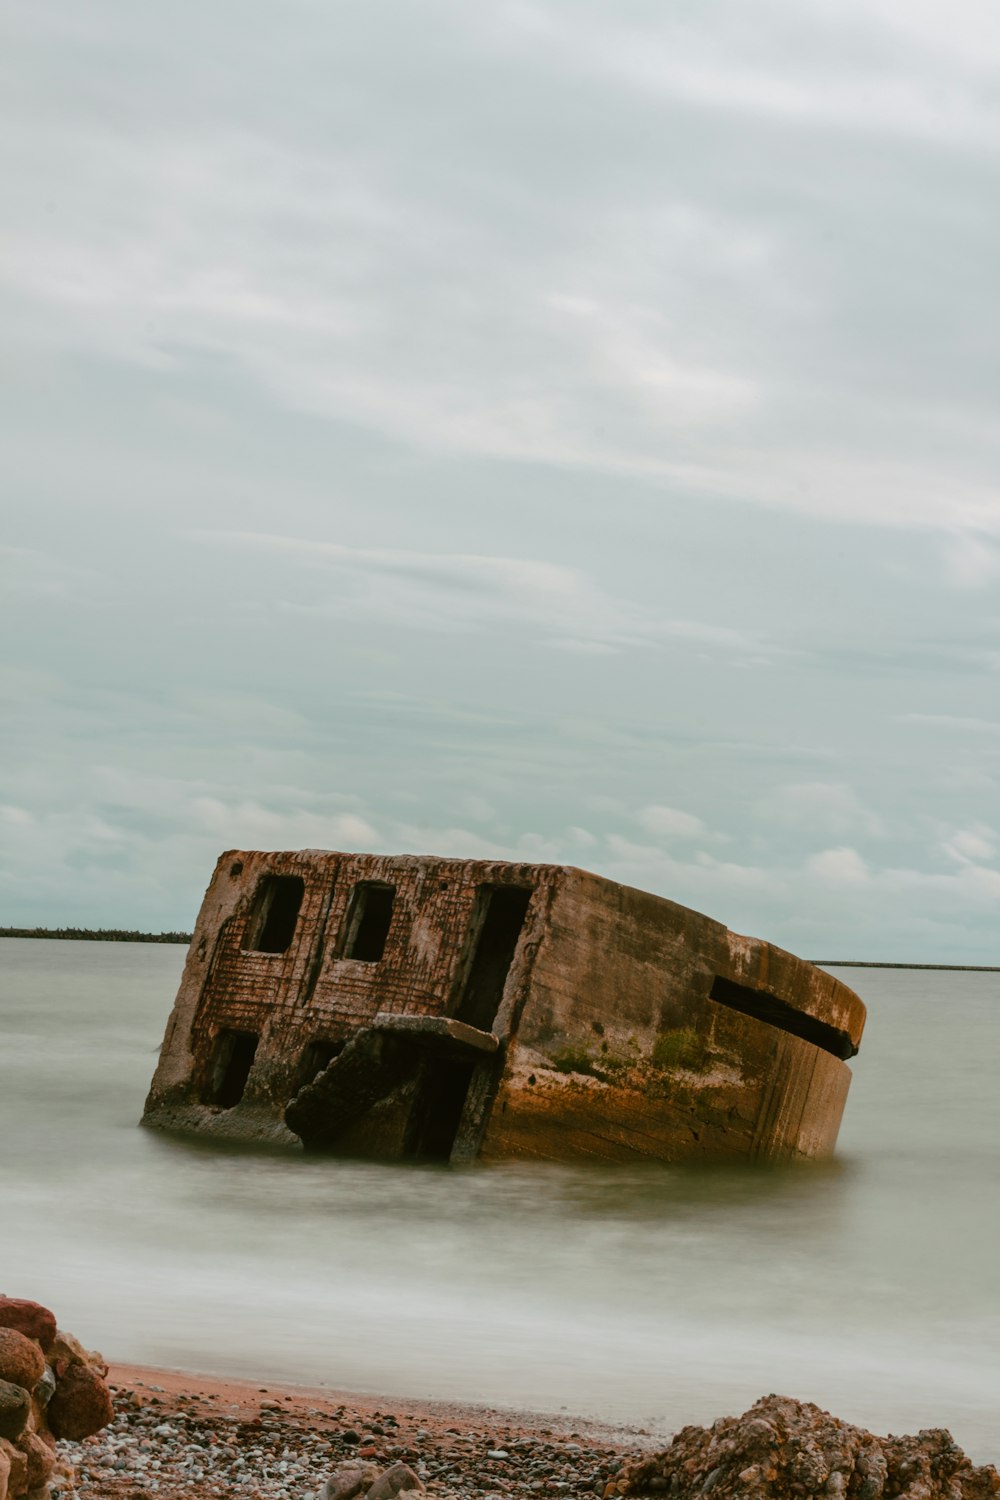 Un barco oxidado sentado sobre un cuerpo de agua